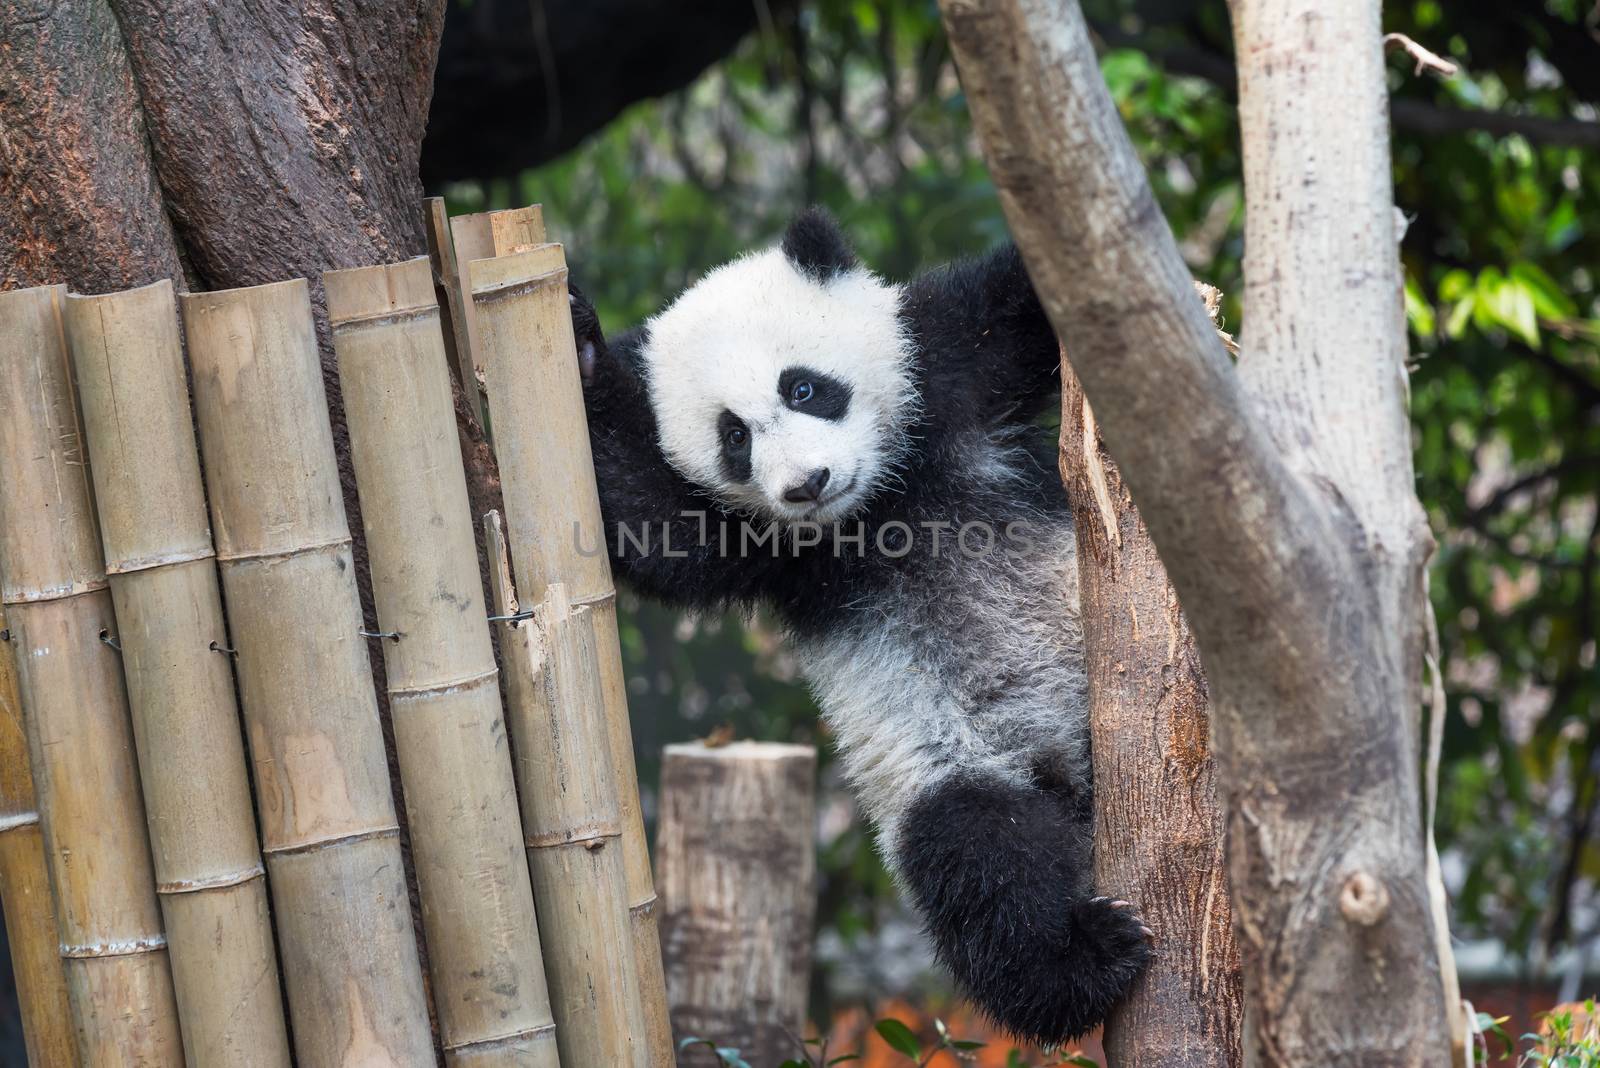 Panda cub playing in a tree, Chengdu, China